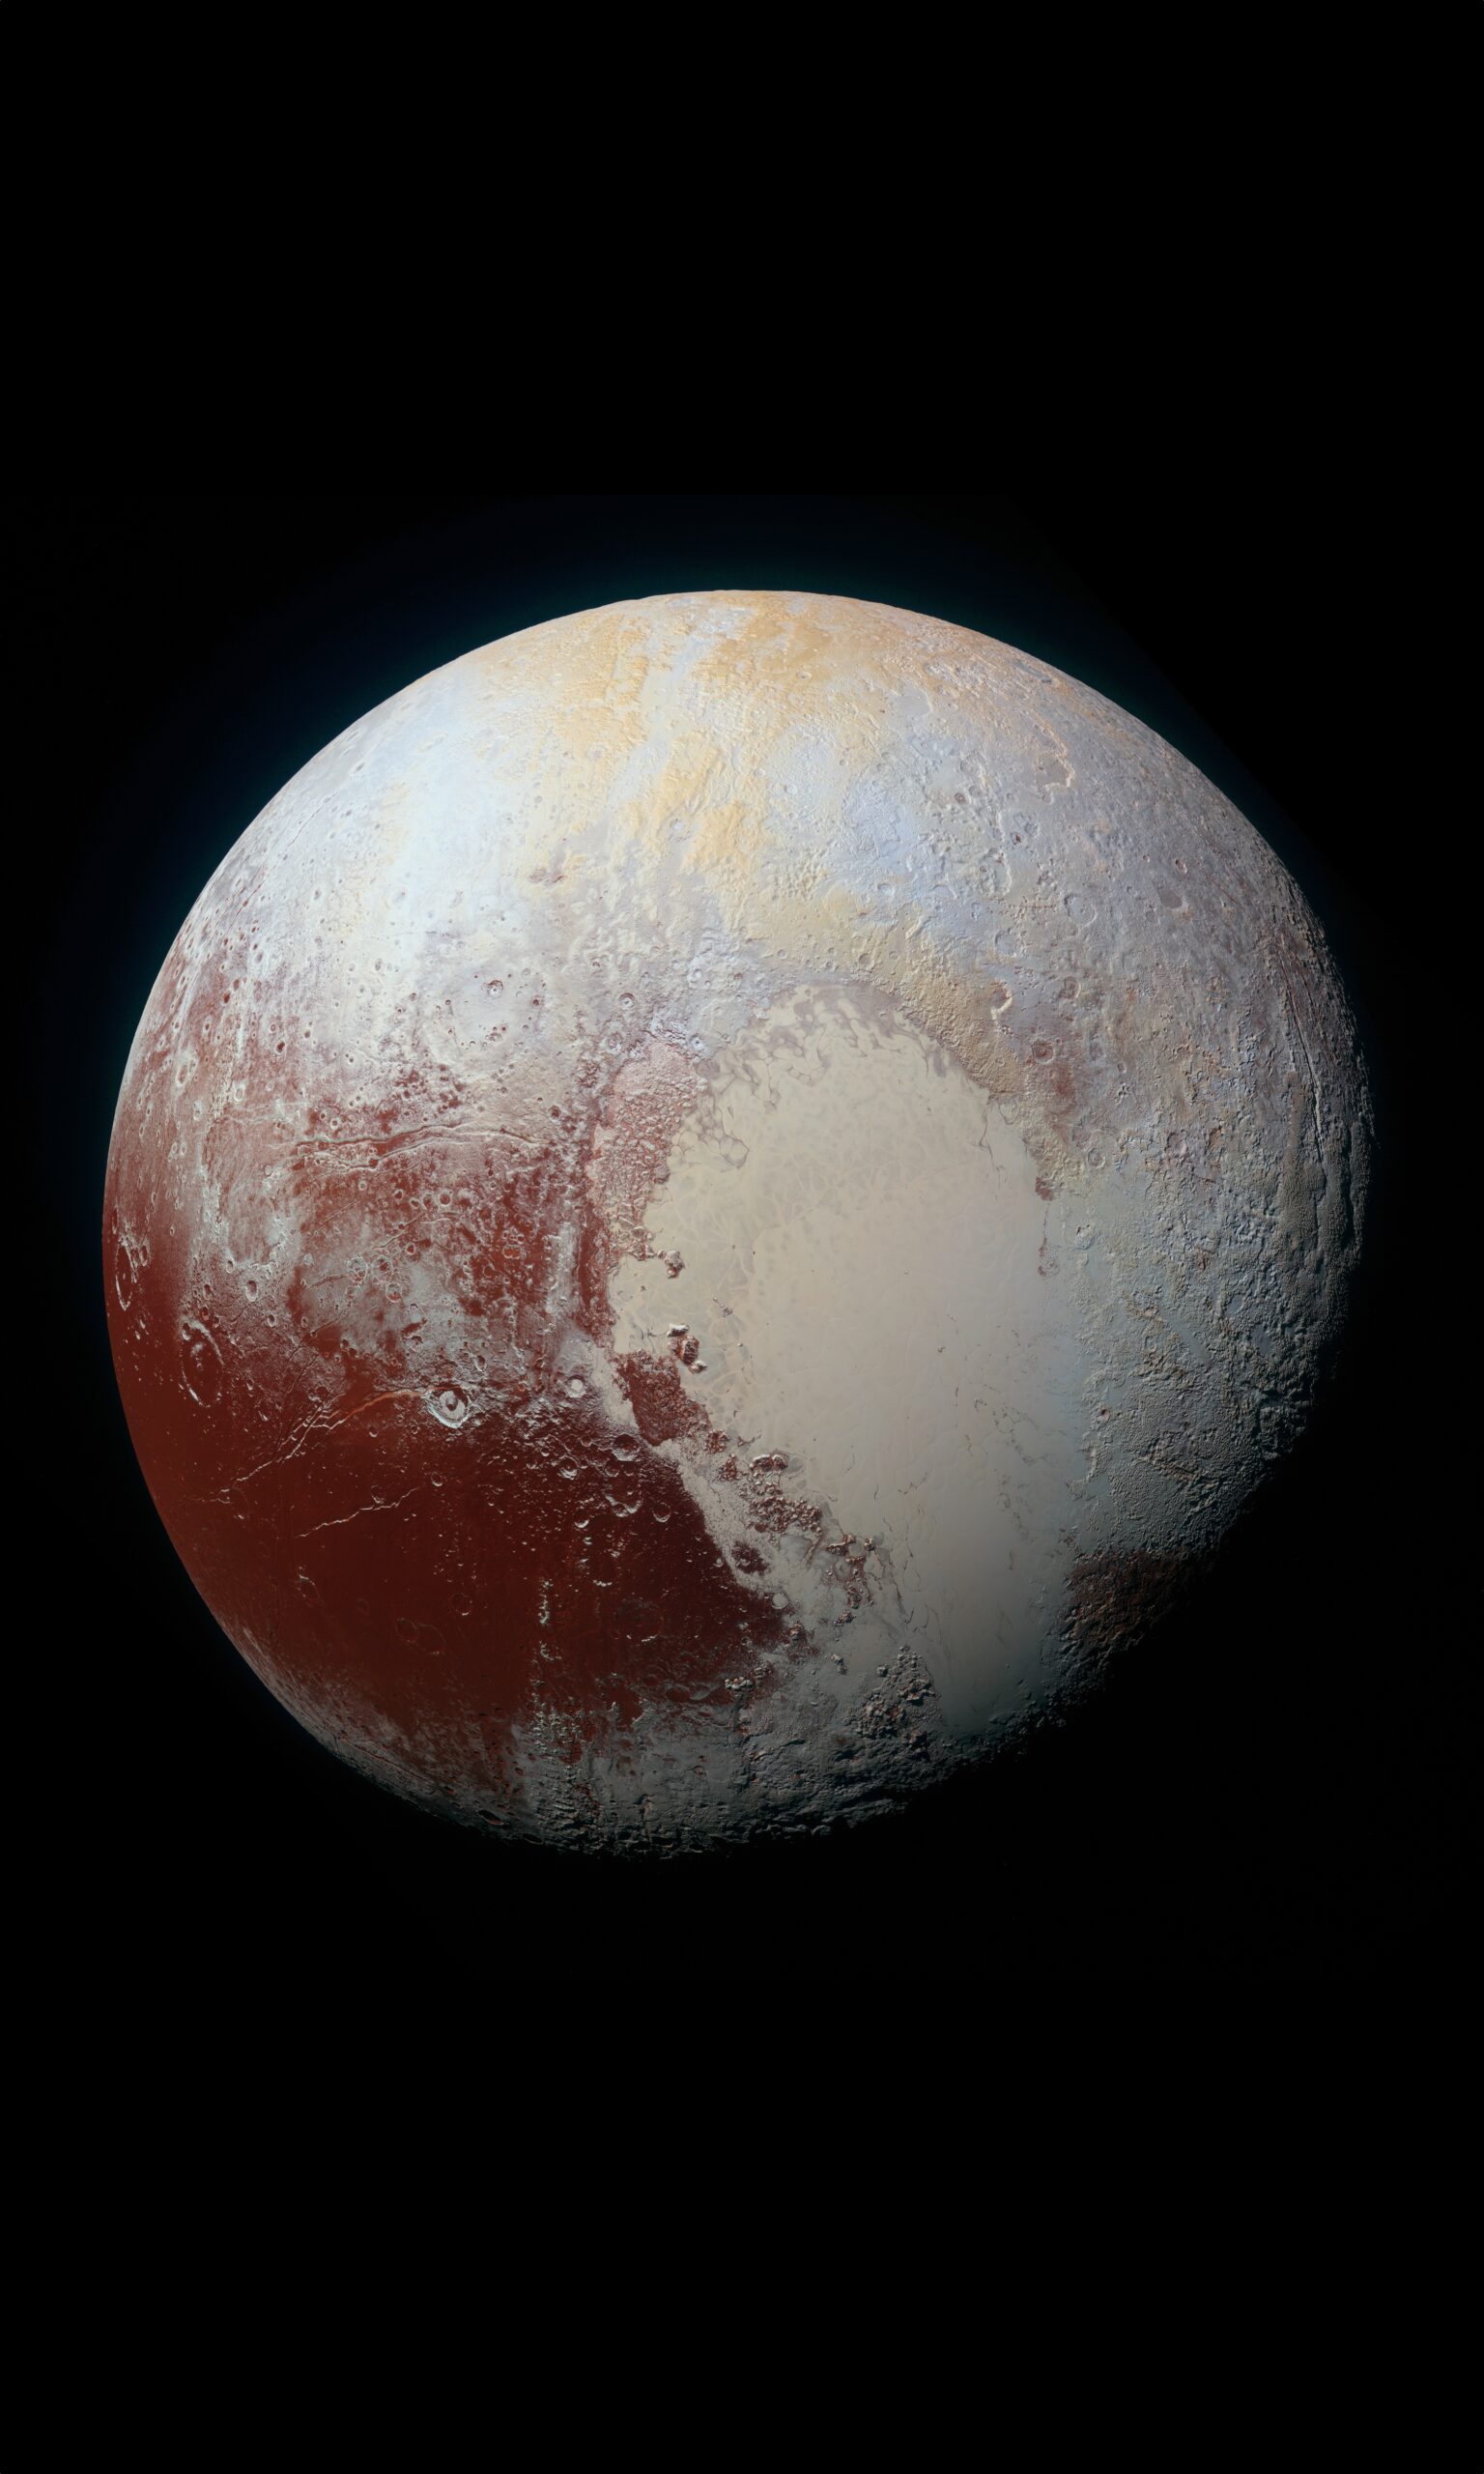 Pluto photographerd by the NASA's New Horizons spacecraft in 2015.